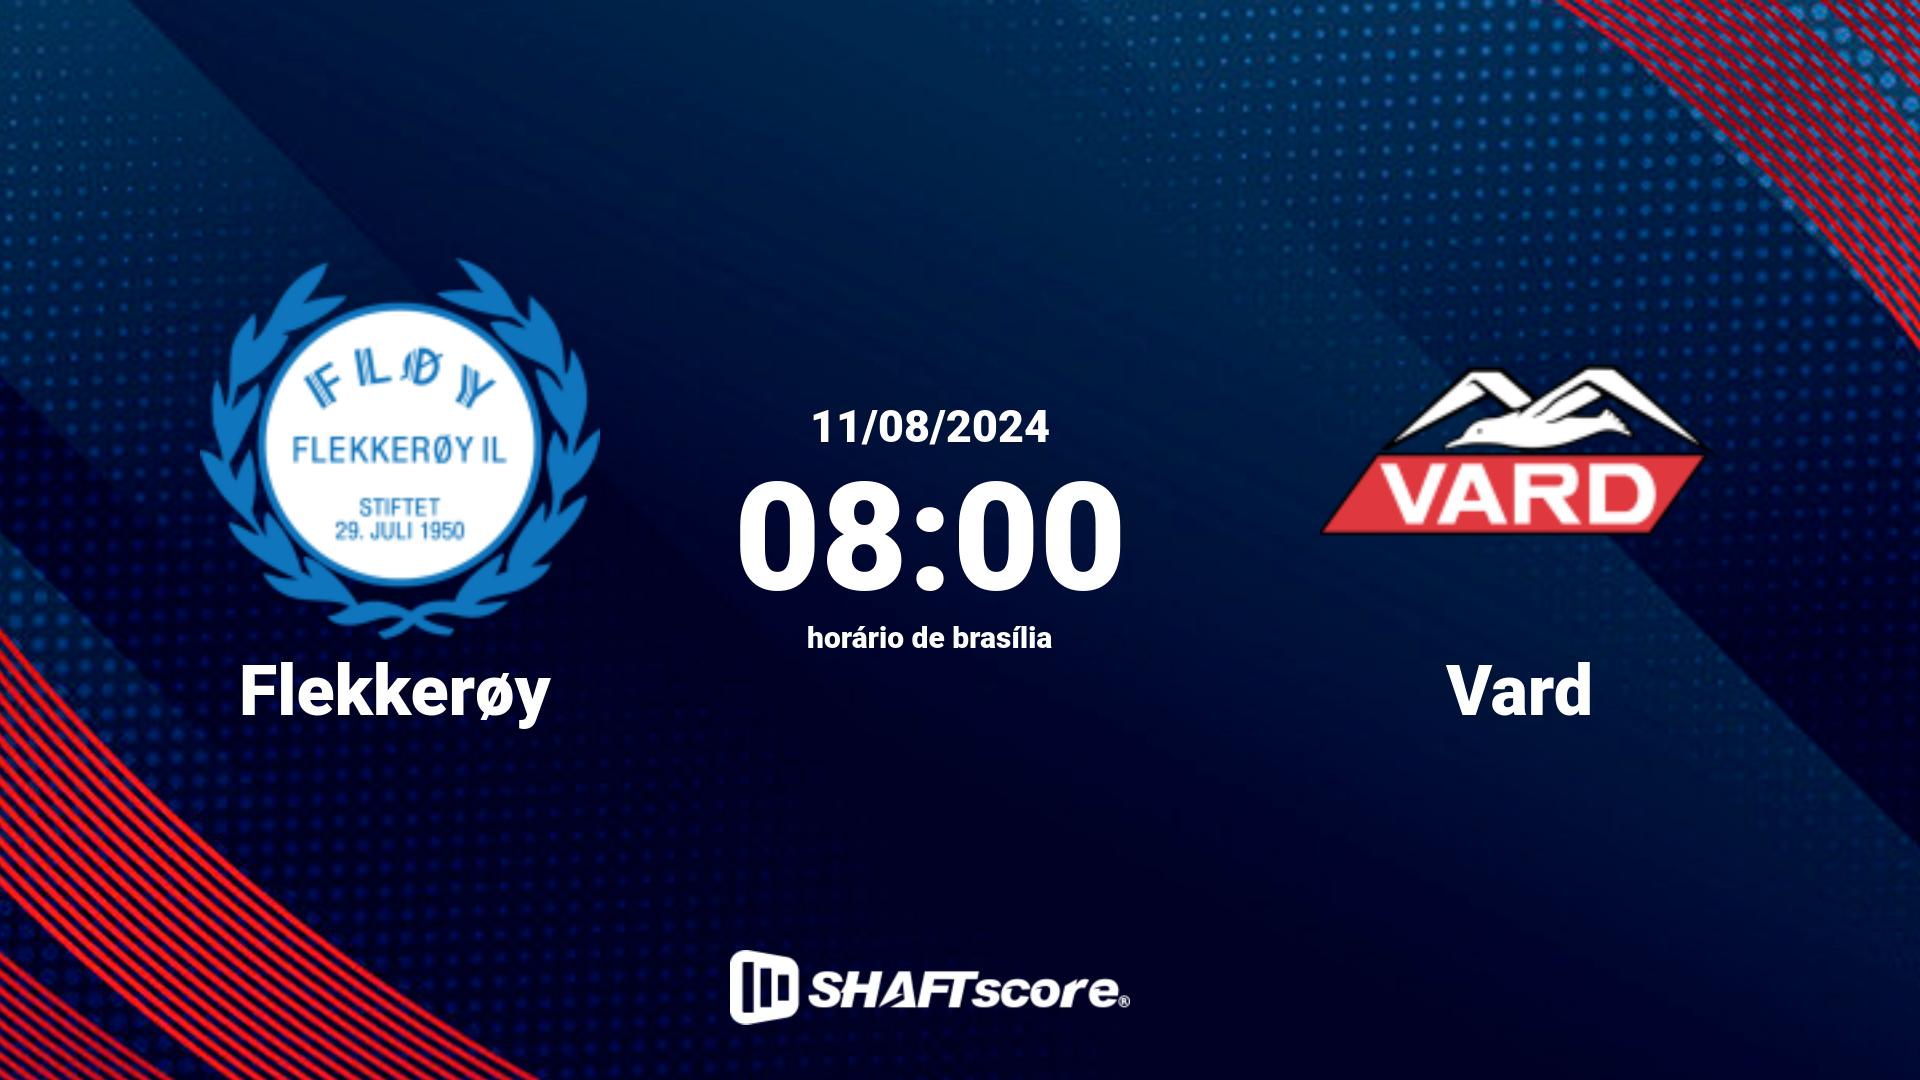 Estatísticas do jogo Flekkerøy vs Vard 11.08 08:00